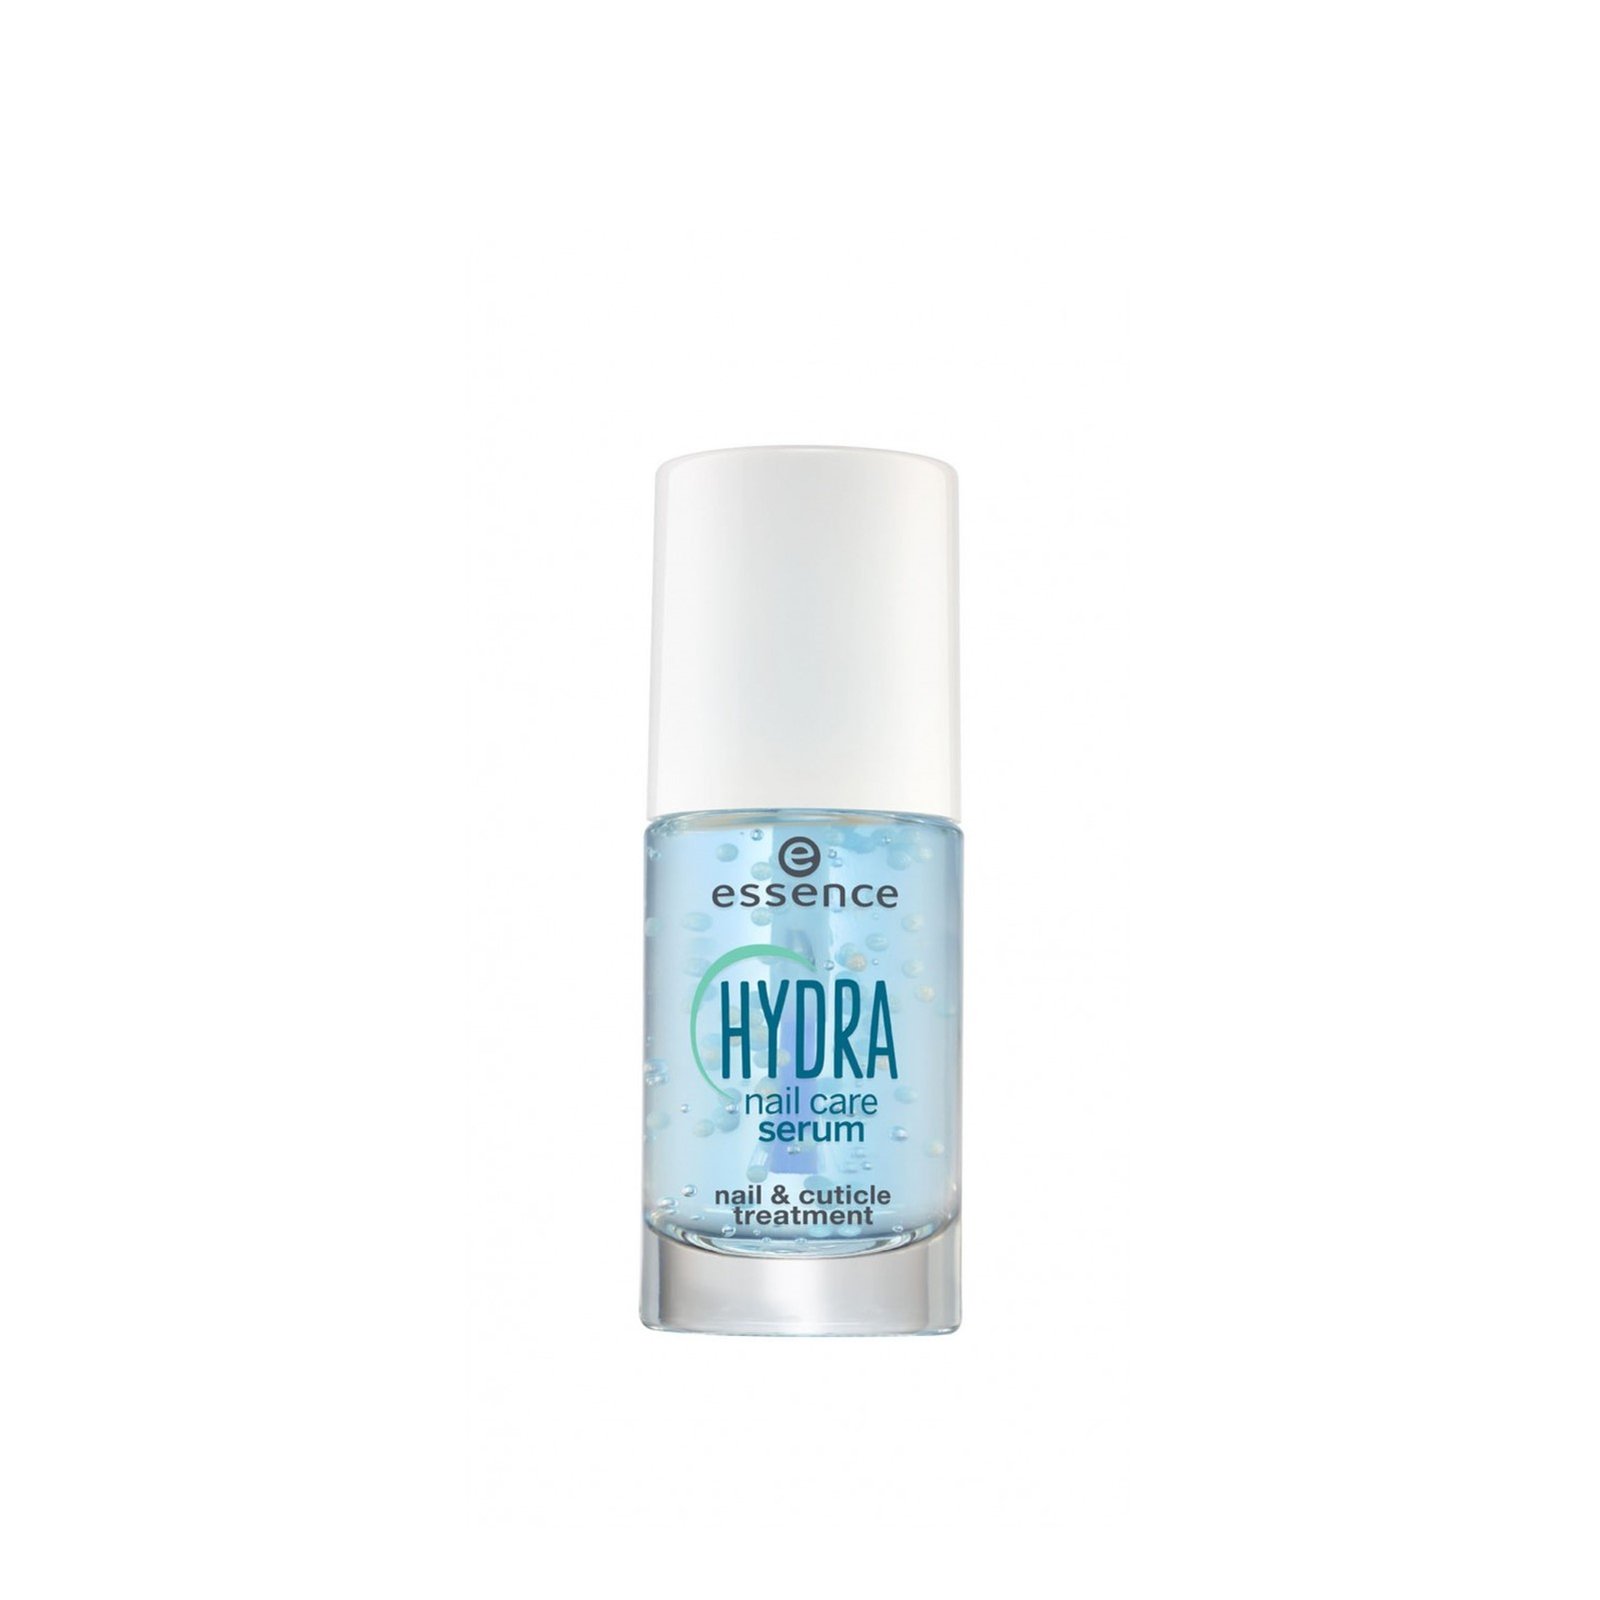 essence Hydra Nail Care Serum 8ml (0.27 fl oz)